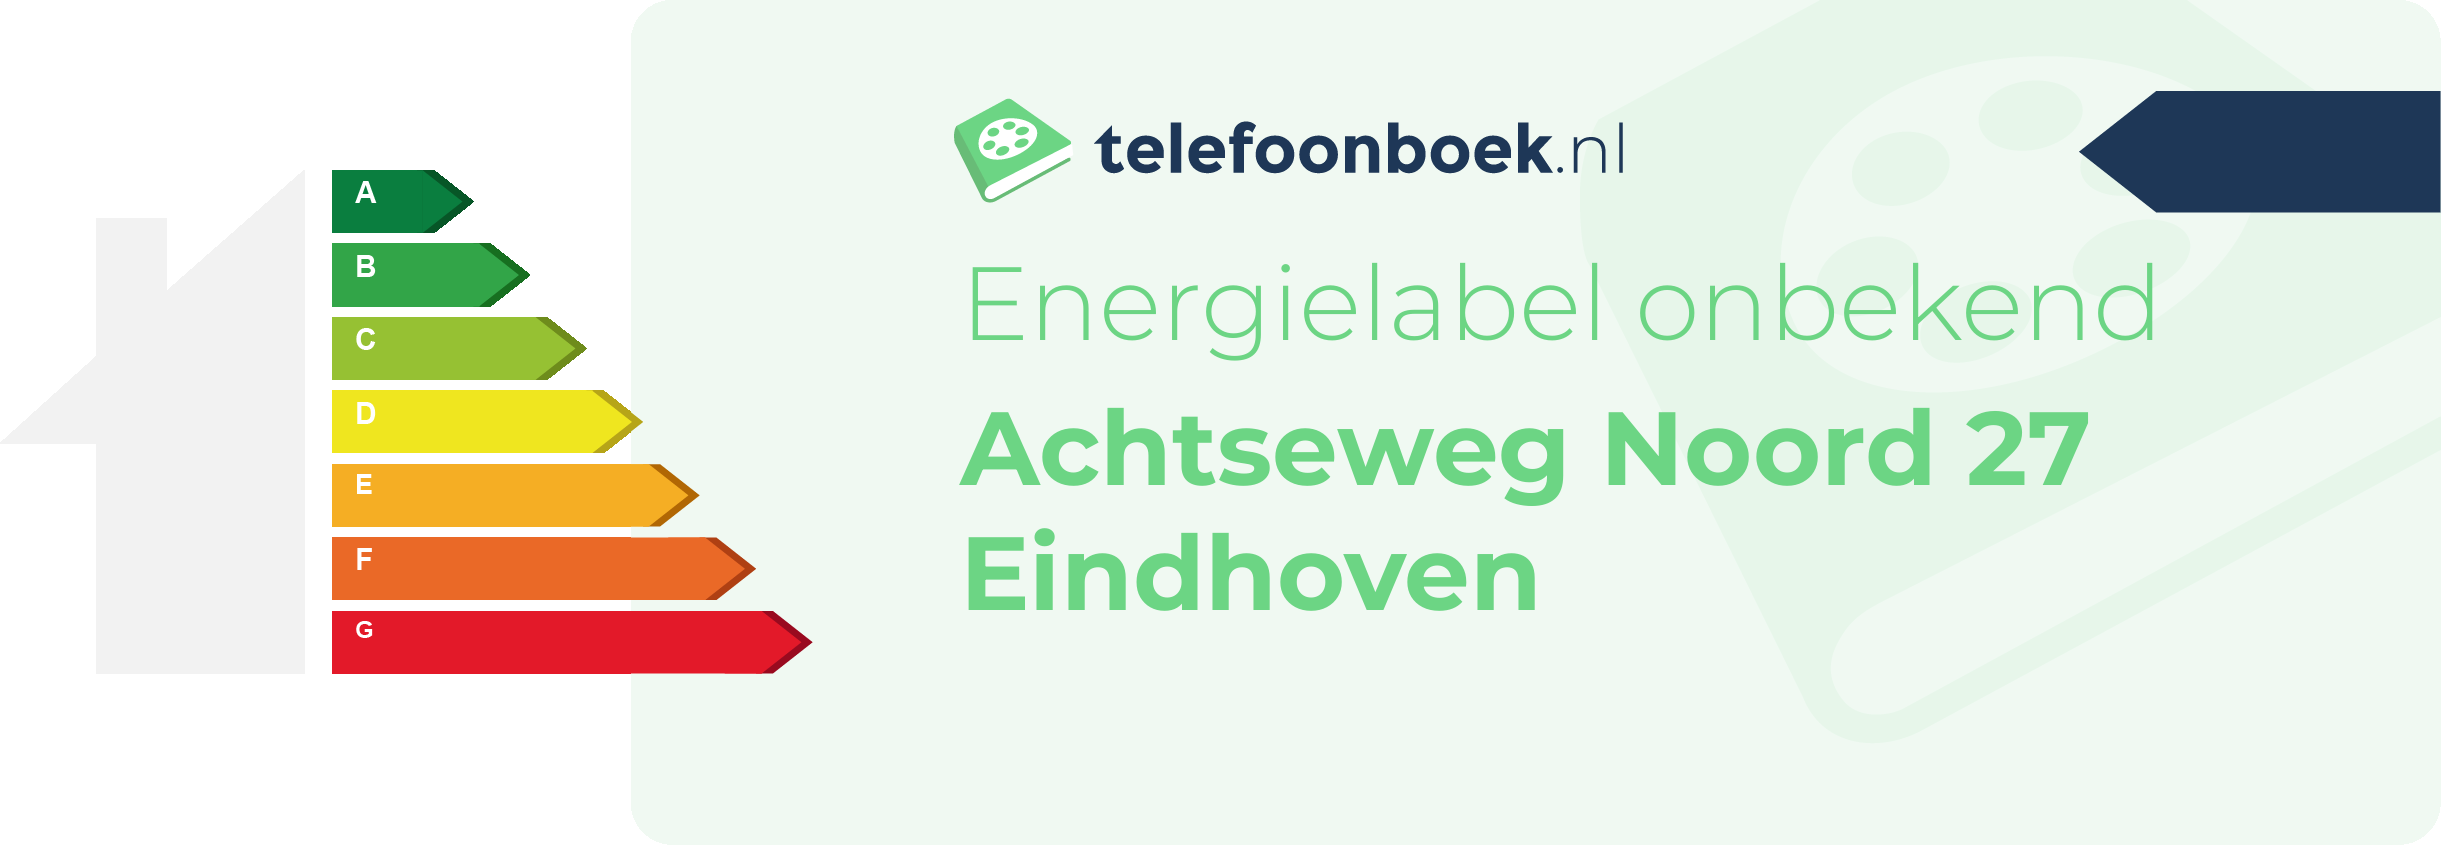 Energielabel Achtseweg Noord 27 Eindhoven